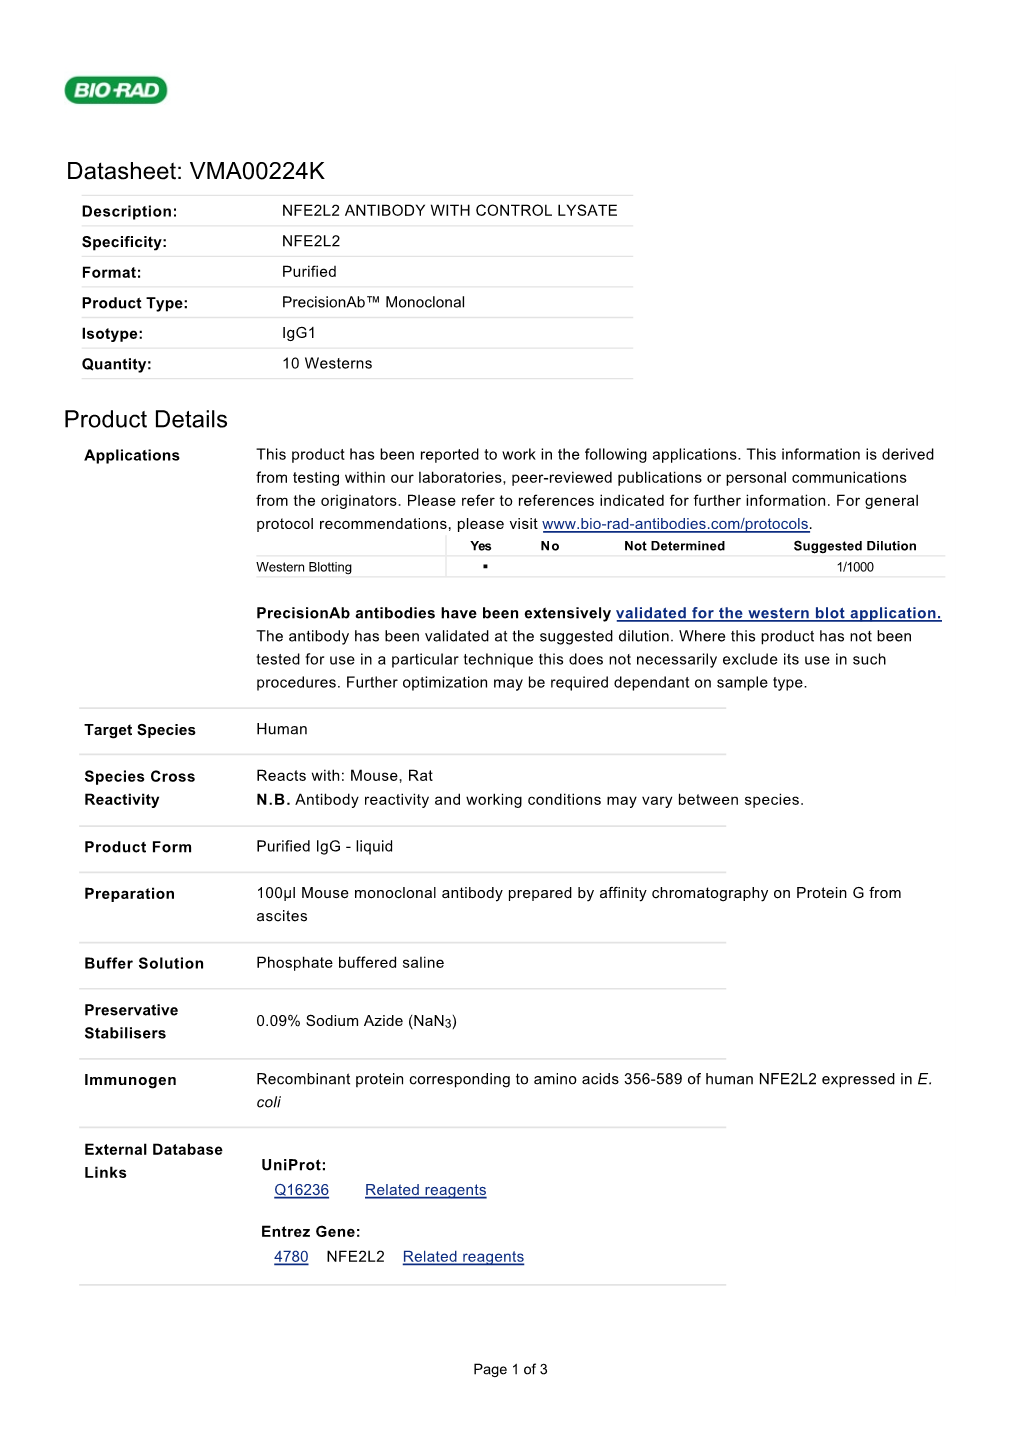 Datasheet: VMA00224K Product Details